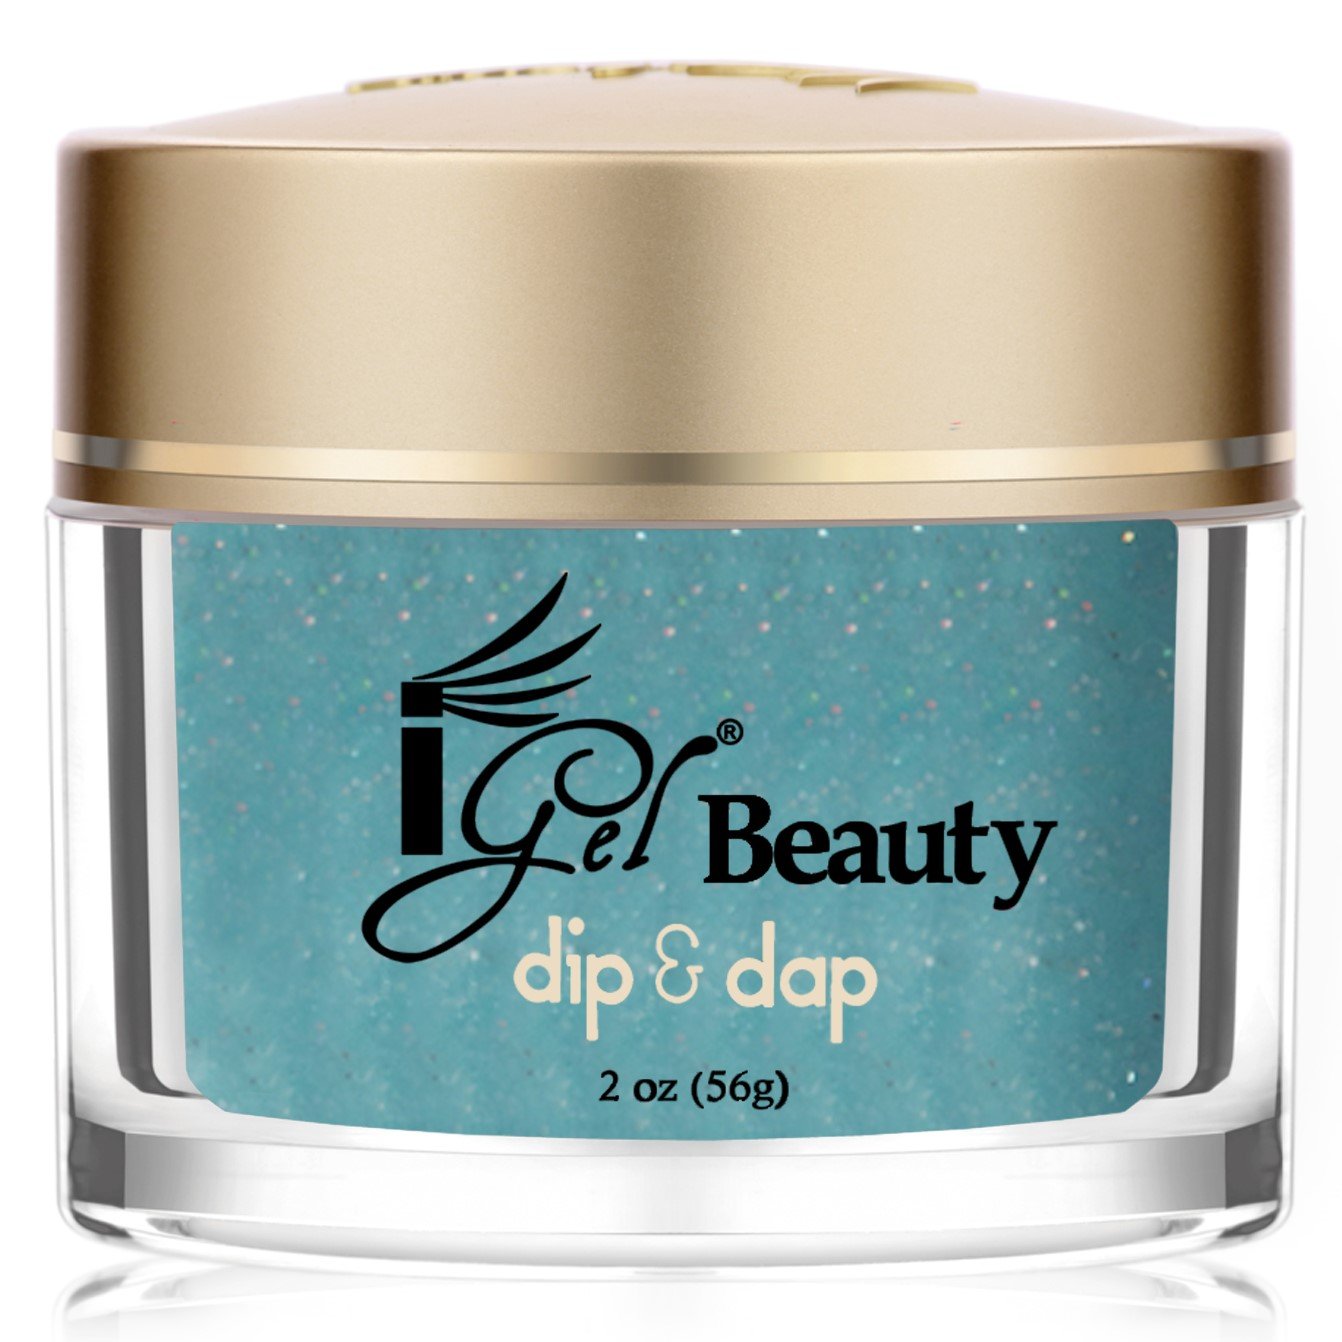 iGel Beauty - Dip & Dap Powder - DD134 Gumball